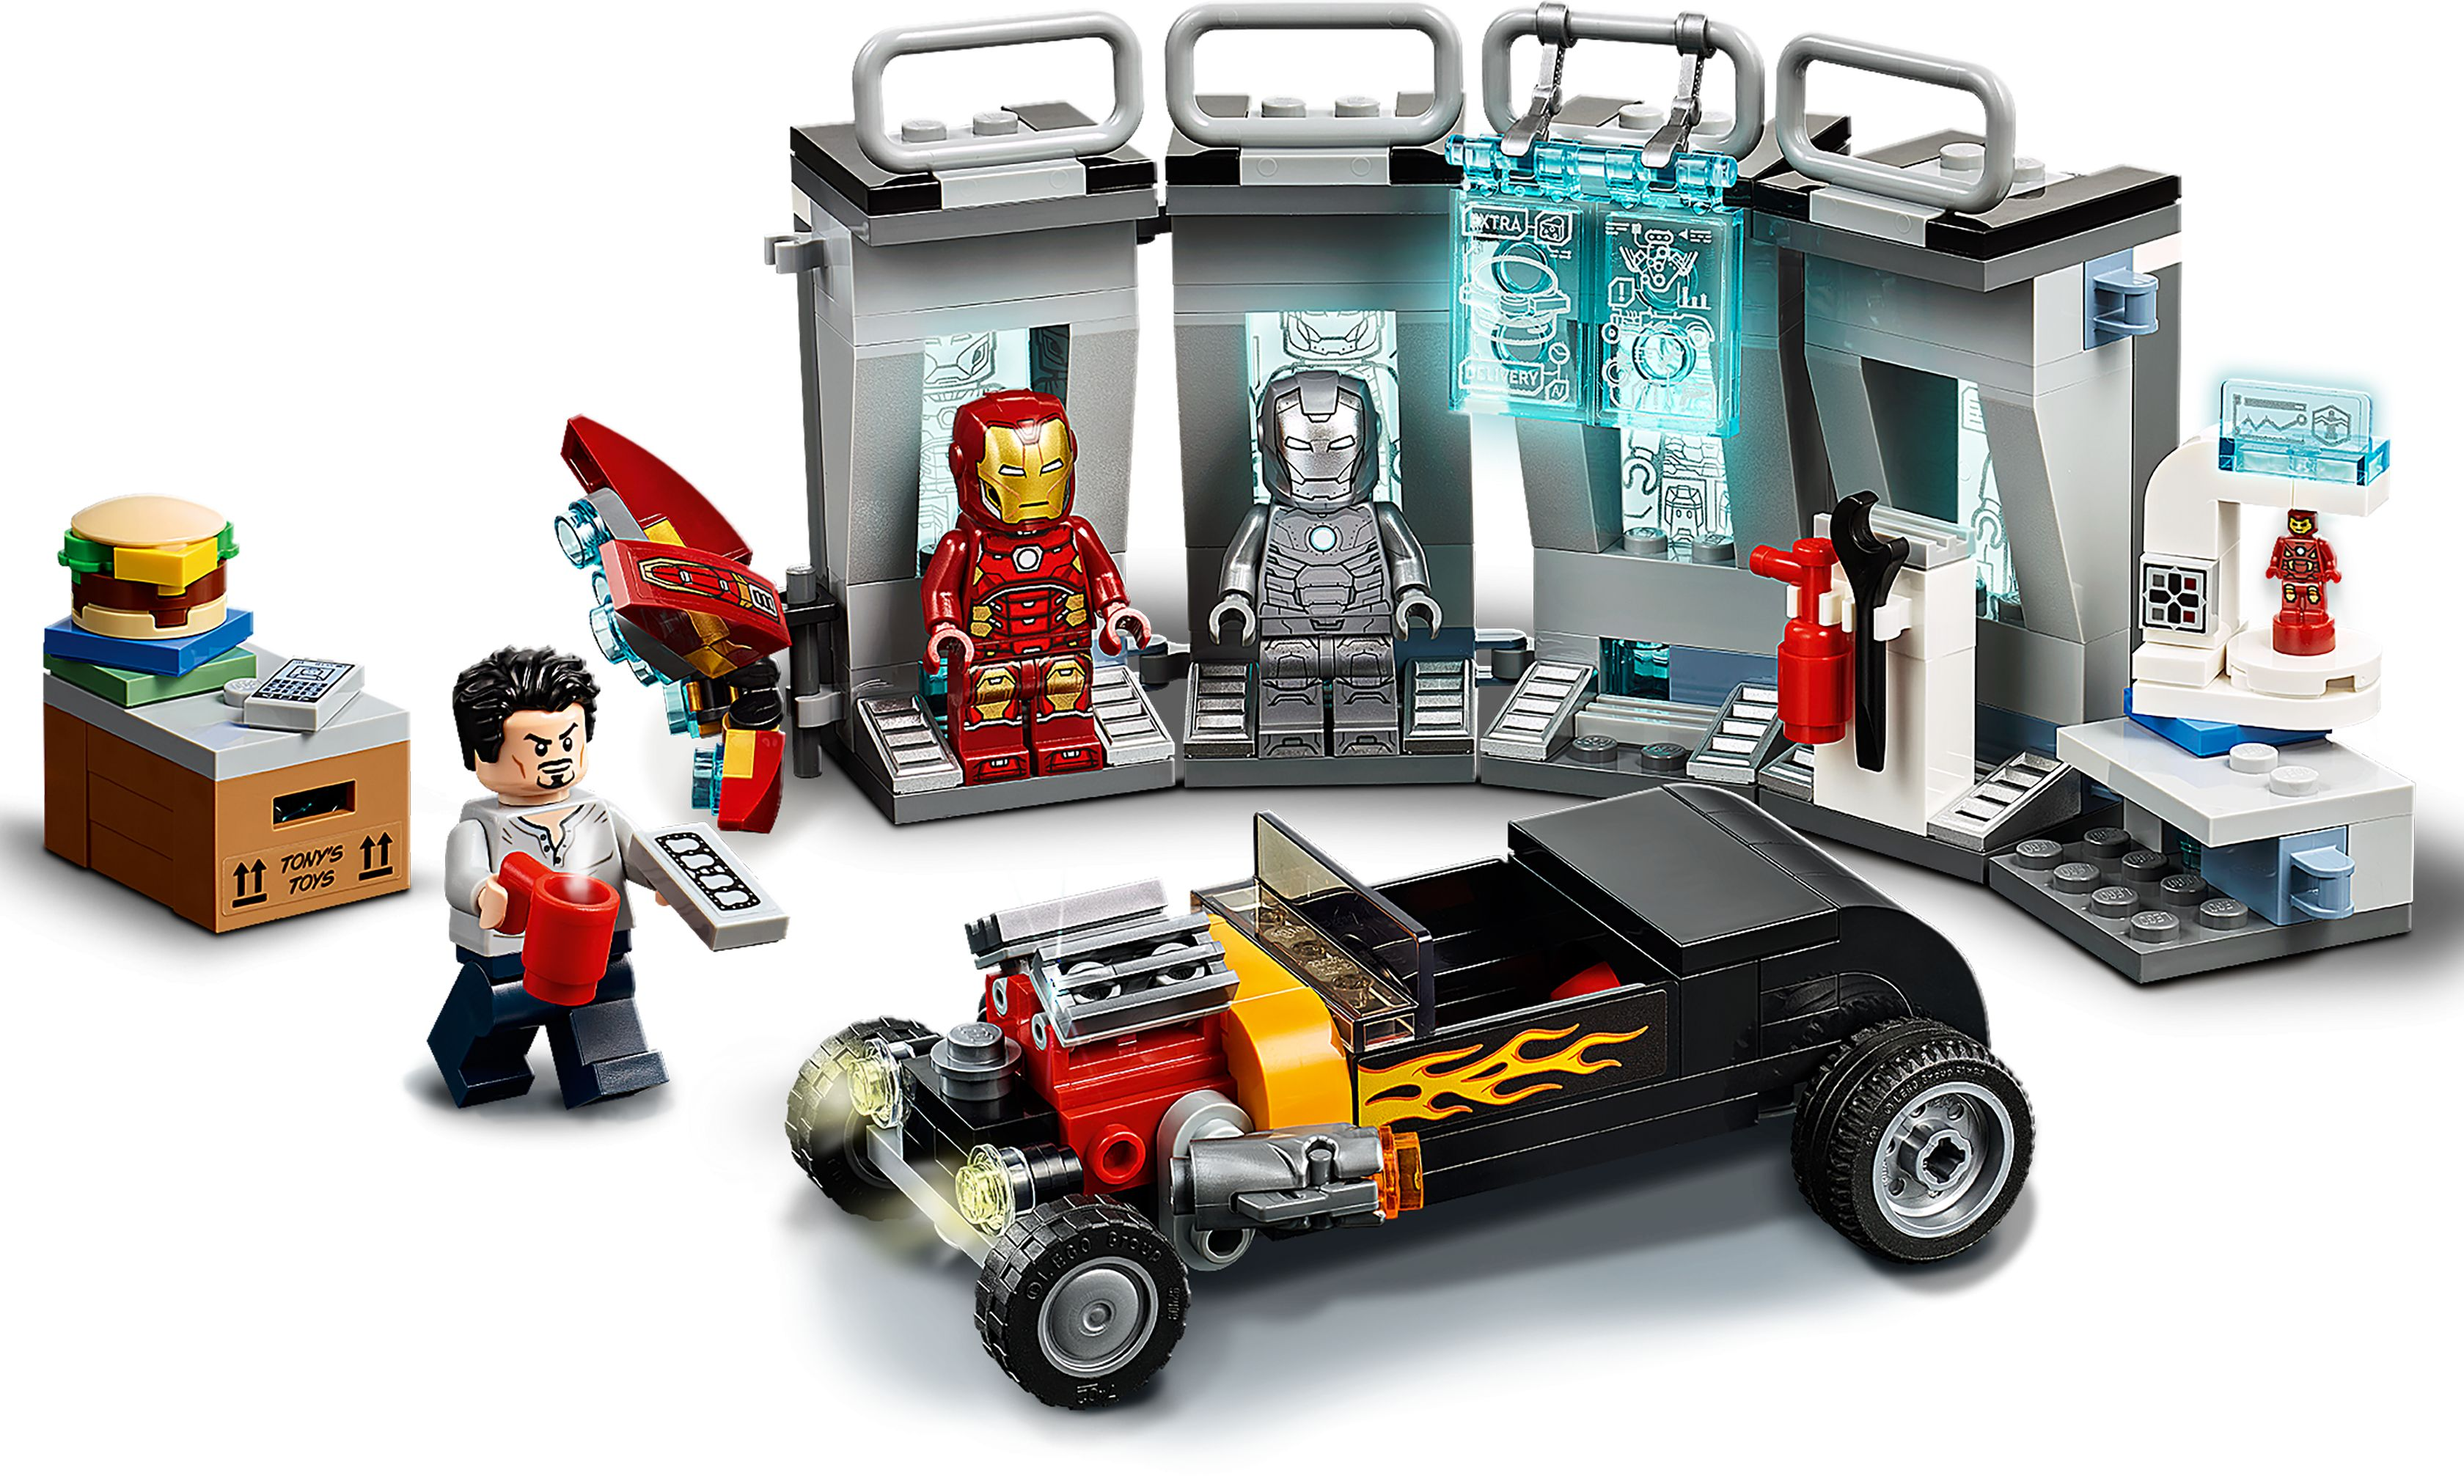 Tony 76167 Arsenal Mans Avengers Stark Bausatz Iron LEGO